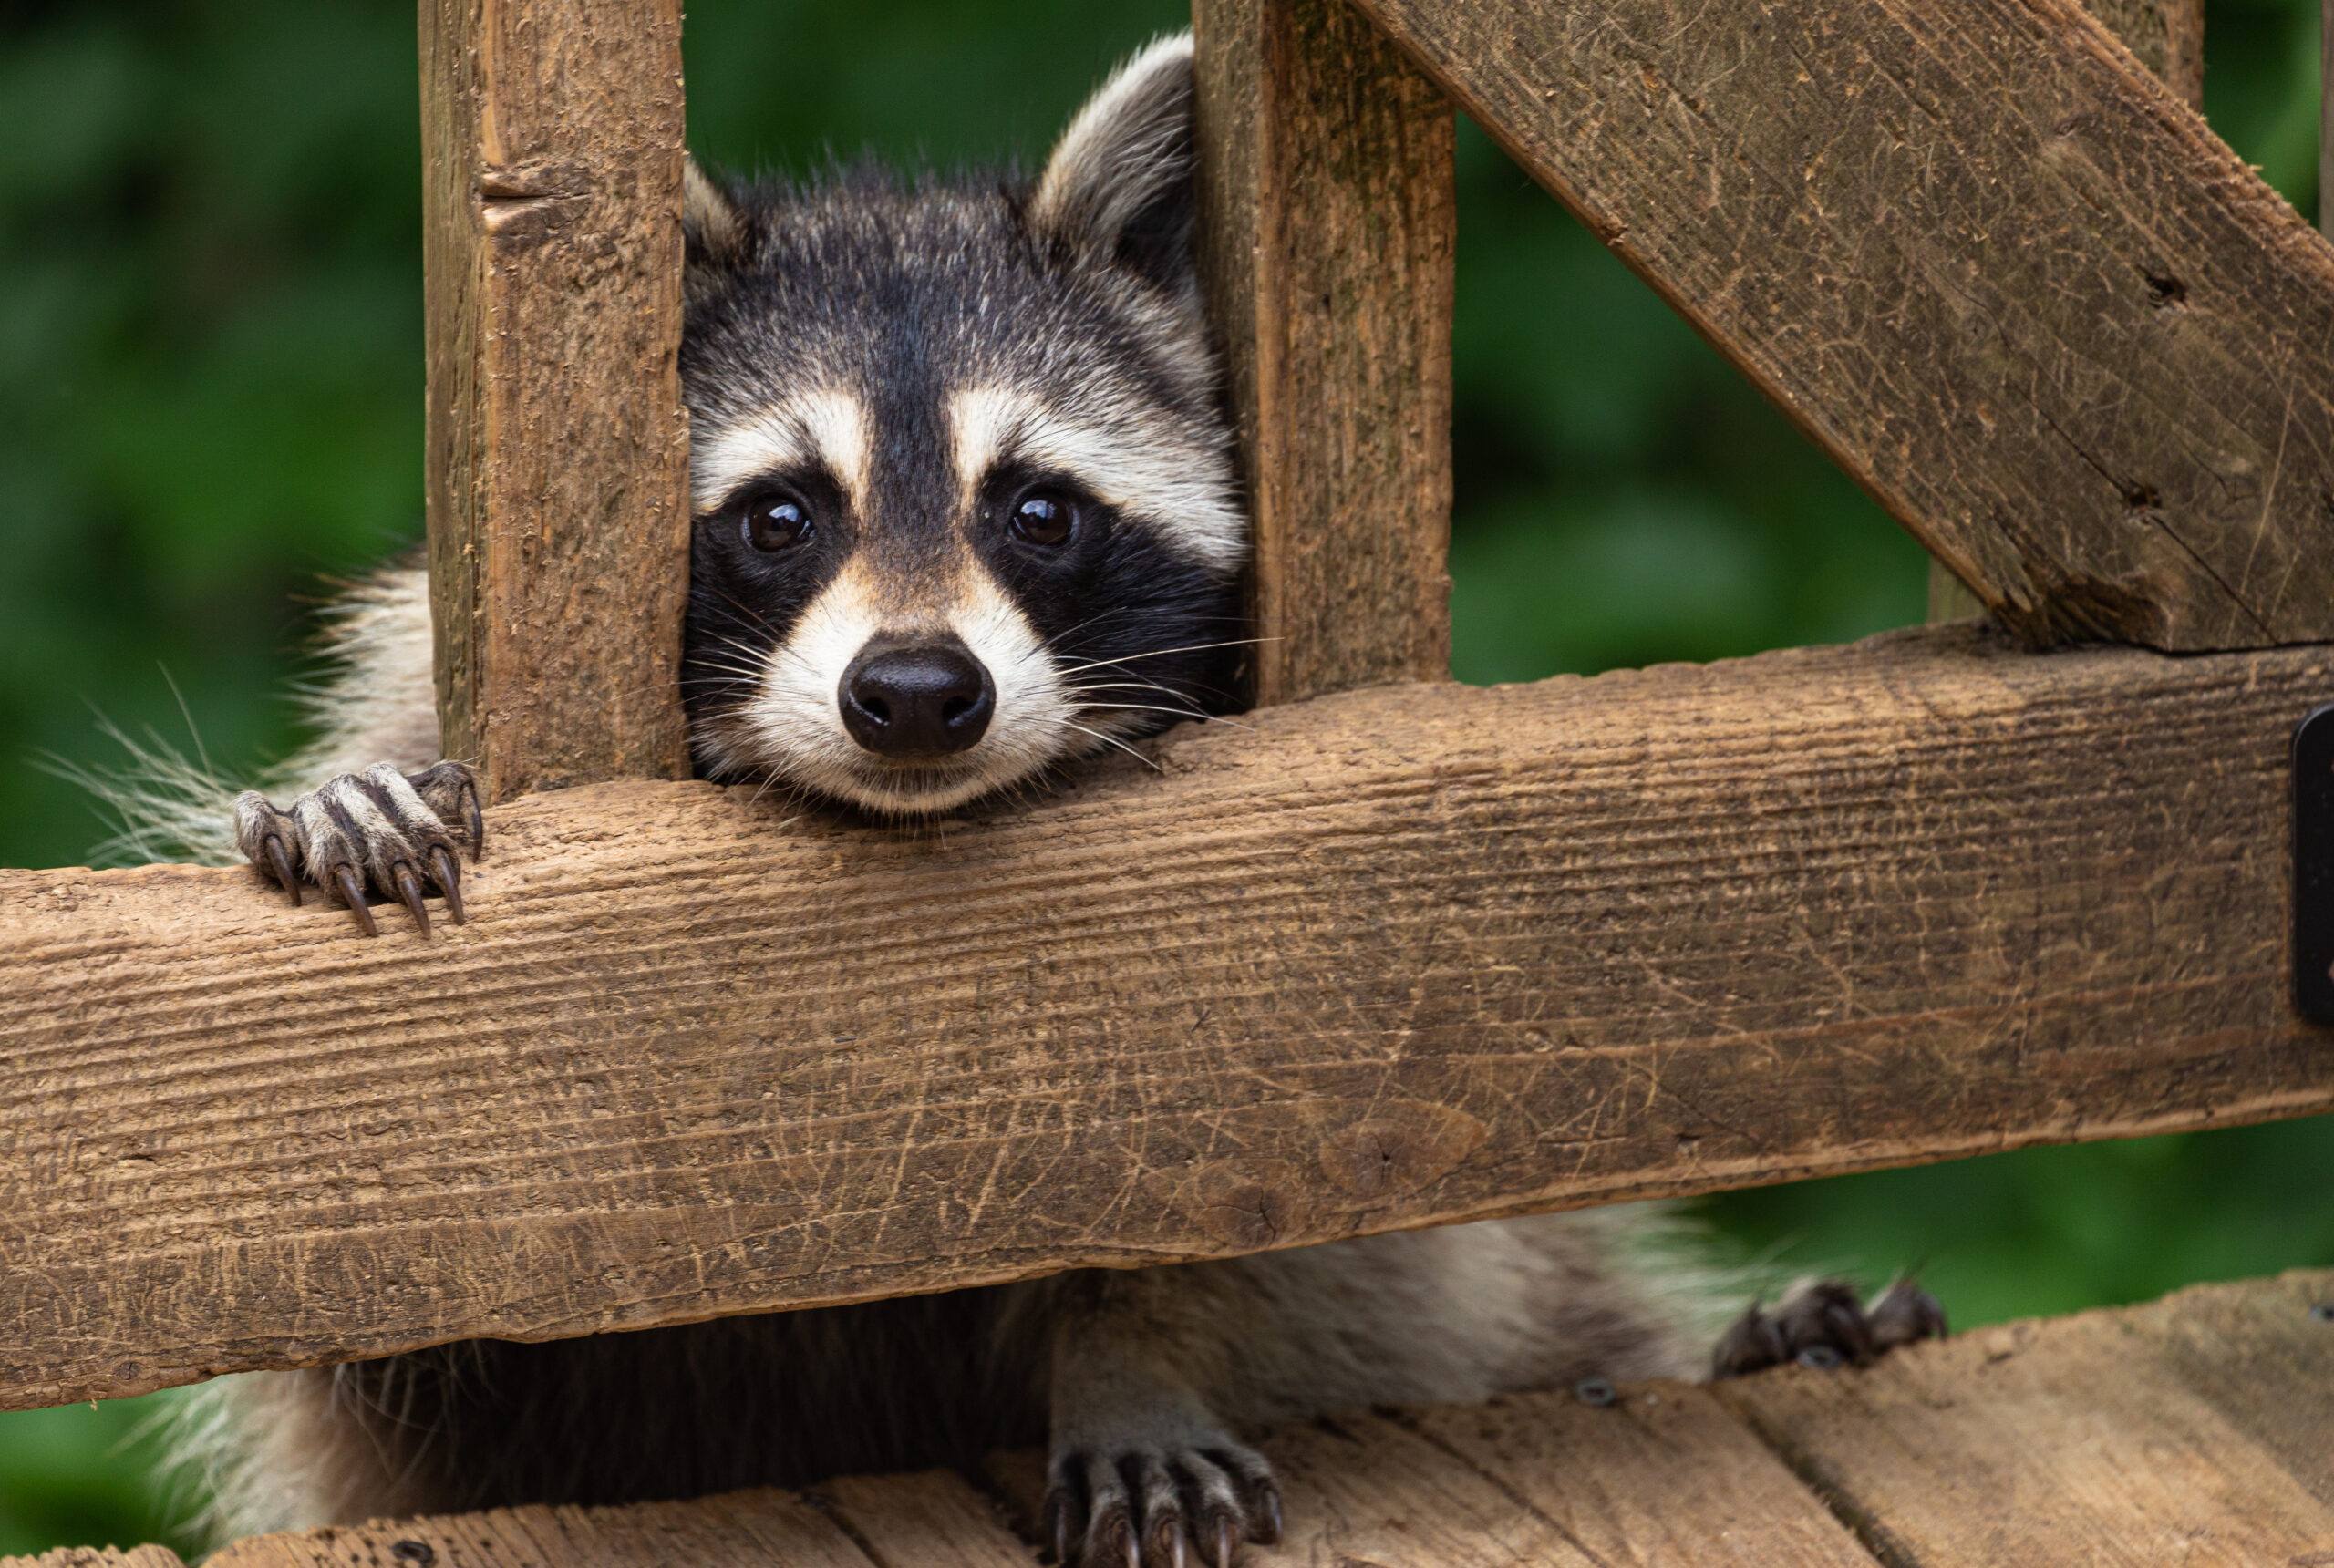 Mother raccoon peeking through deck rails